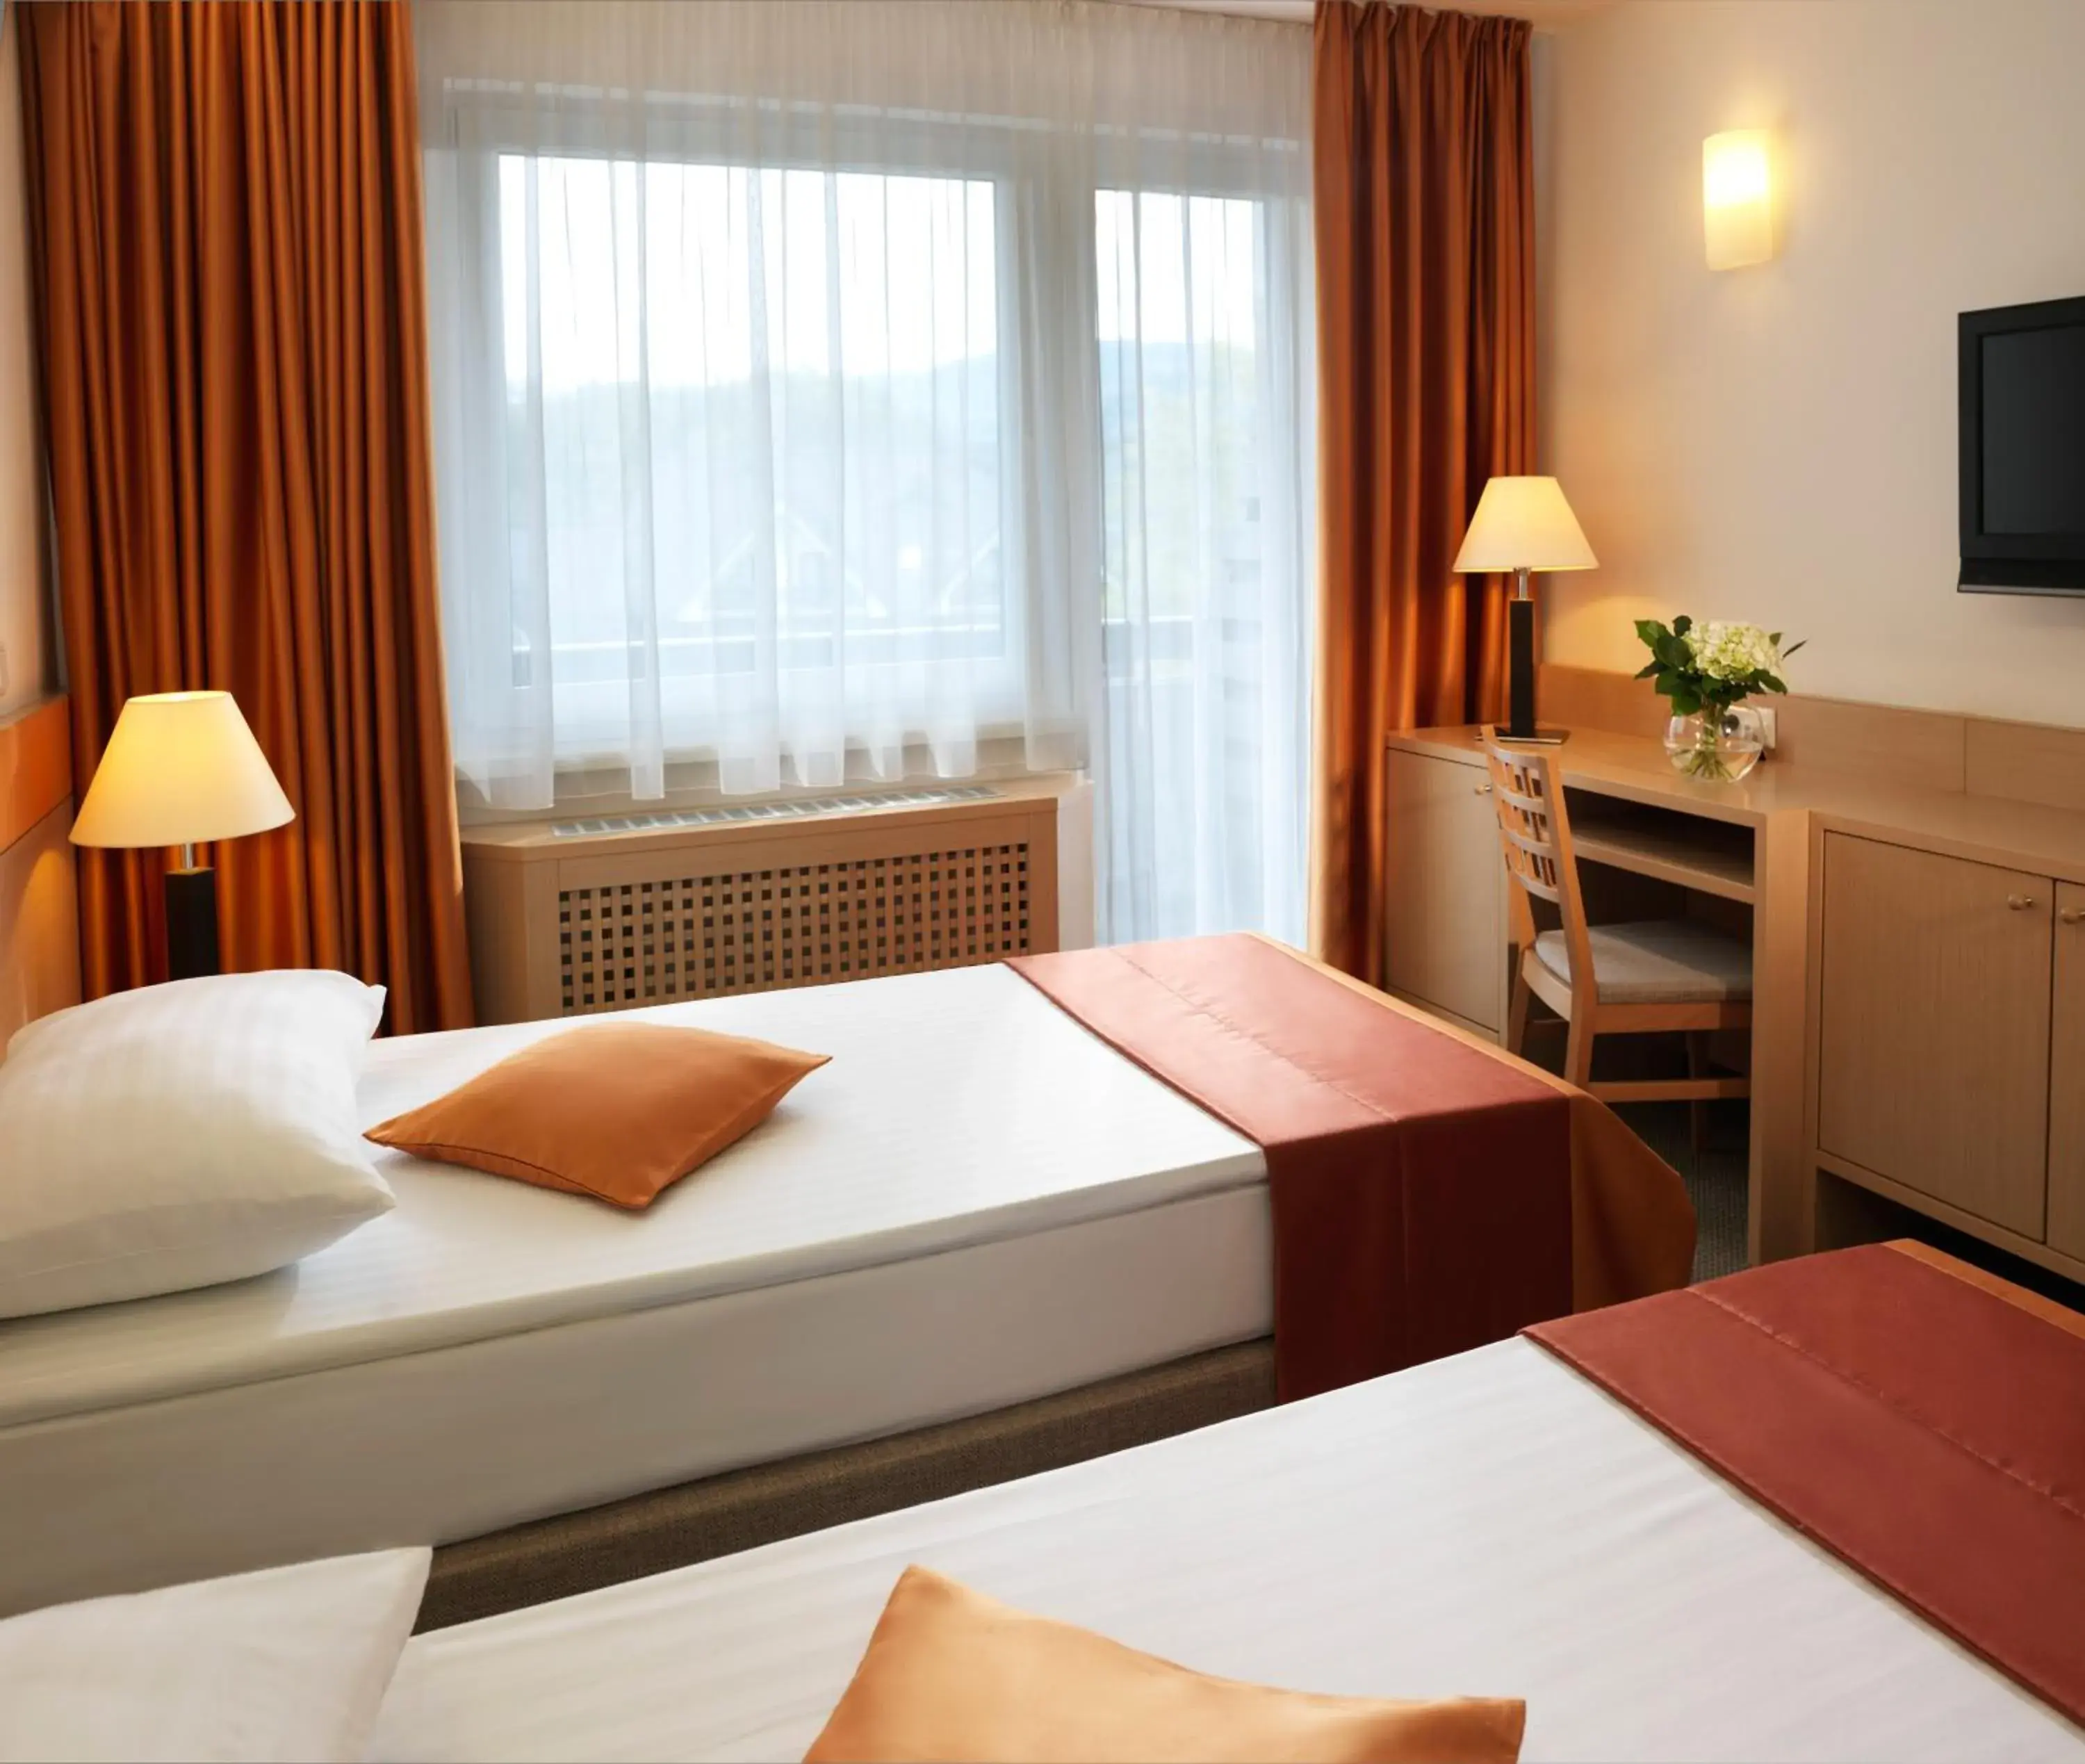 Photo of the whole room in Garni Hotel Savica - Sava Hotels & Resorts